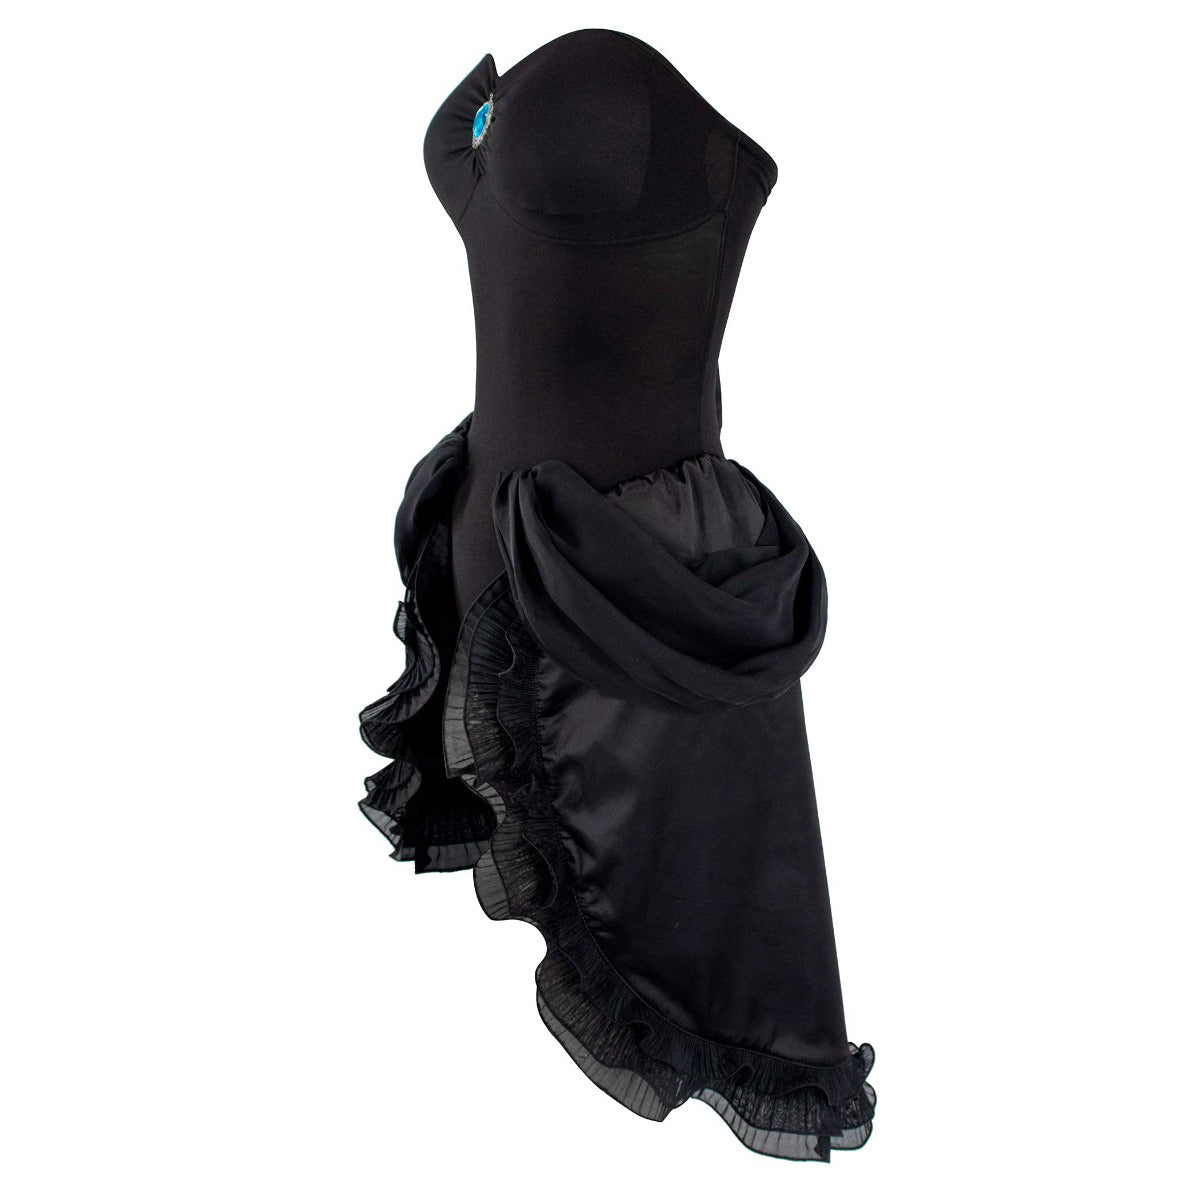 DAZCOS Women US Size Bowsette Cosplay Costume Black Gothic Dress